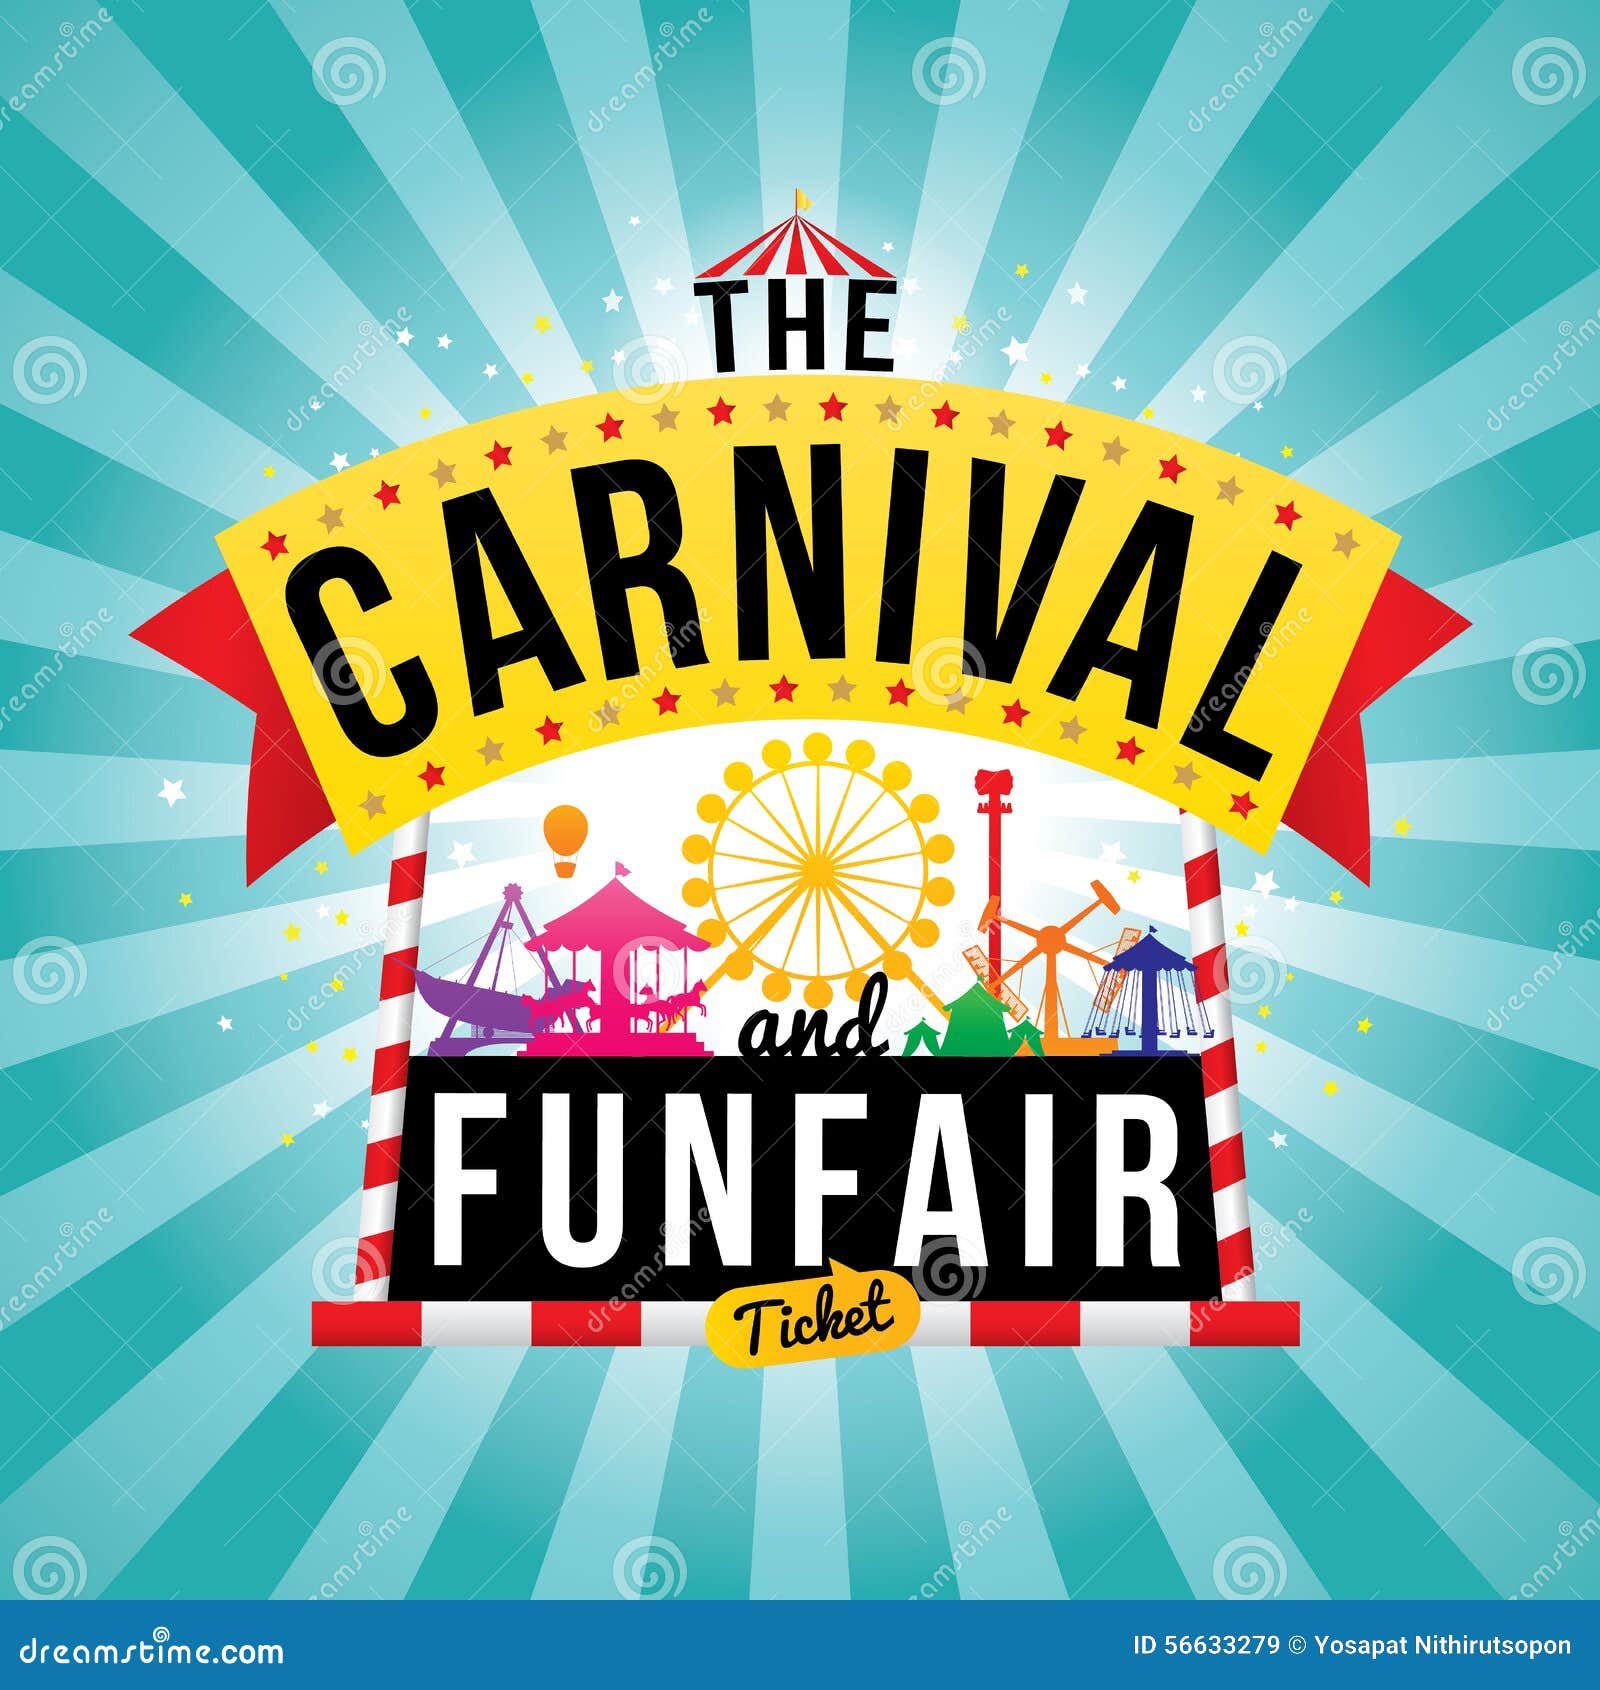 the carnival funfair